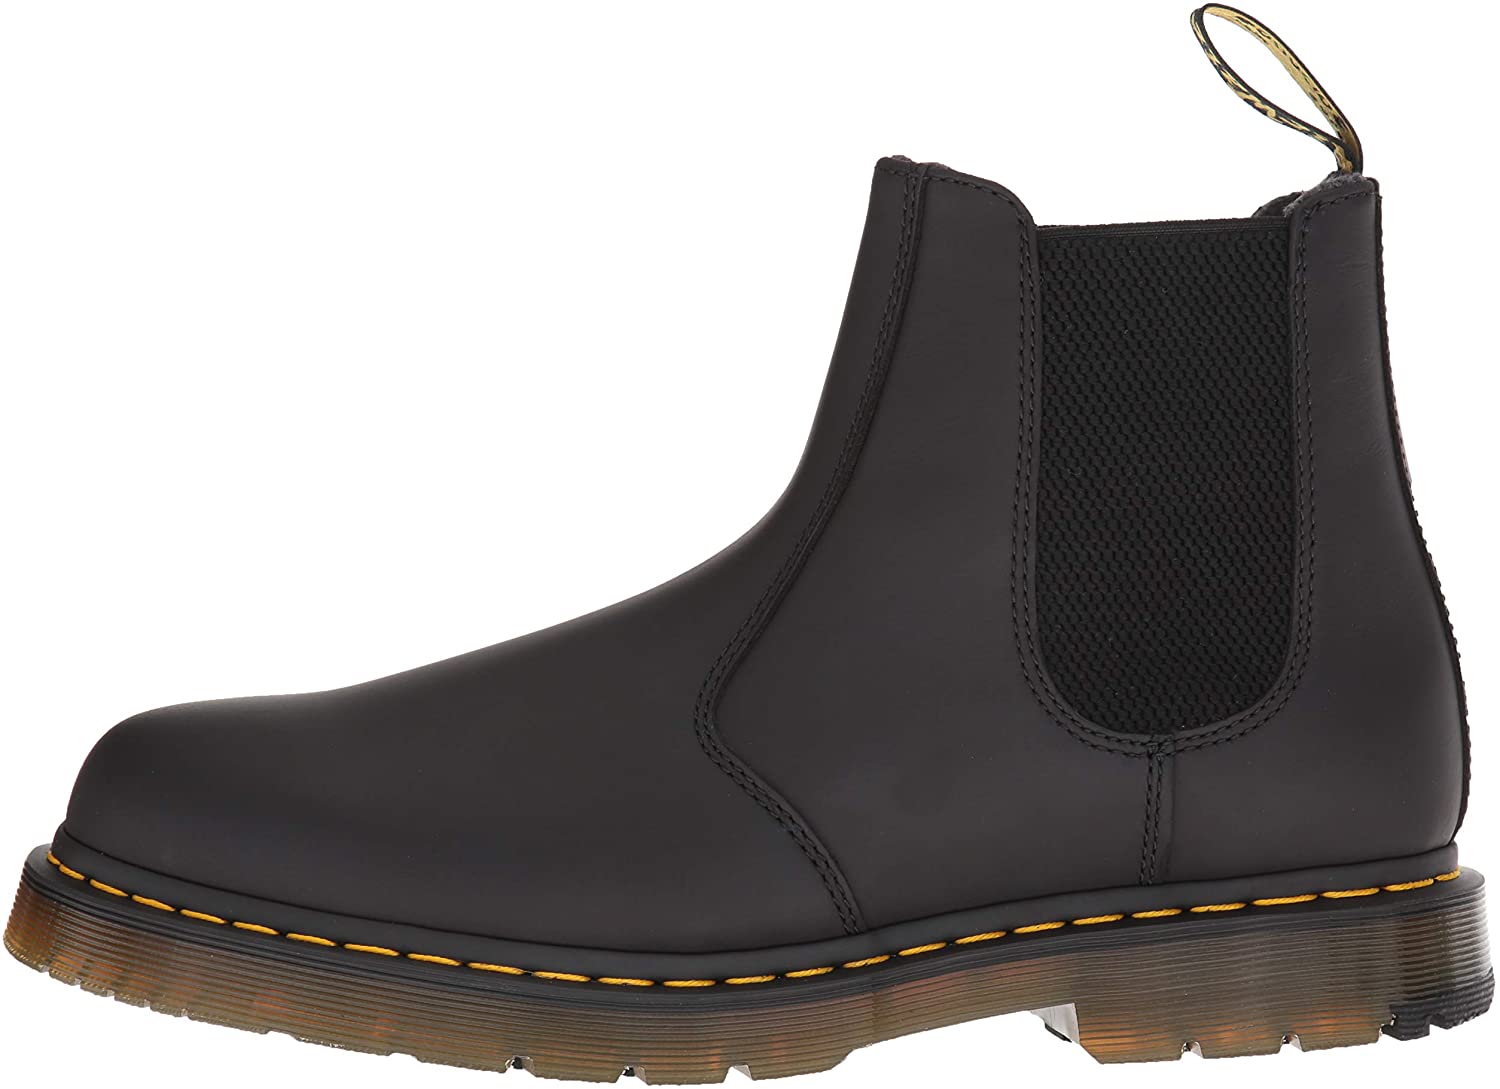 Dr. Martens Men's 2976 Snow Boot, Black, Size 11.0 xZVE 190665173543 | eBay